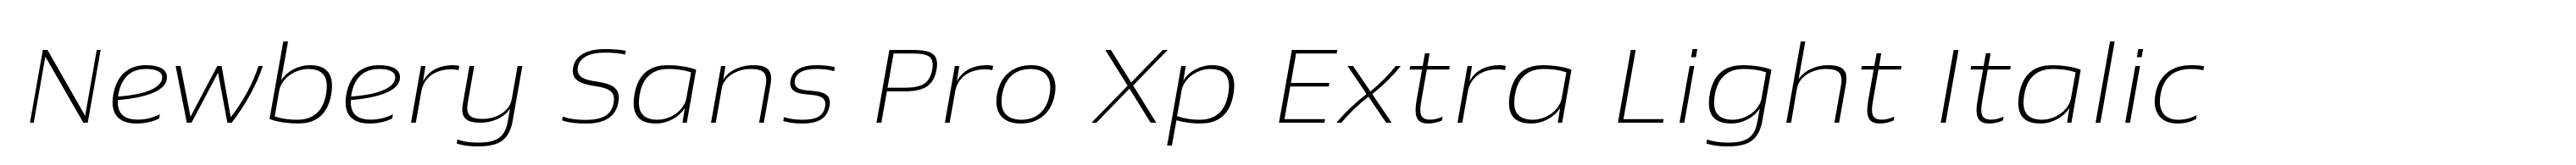 Newbery Sans Pro Xp Extra Light Italic